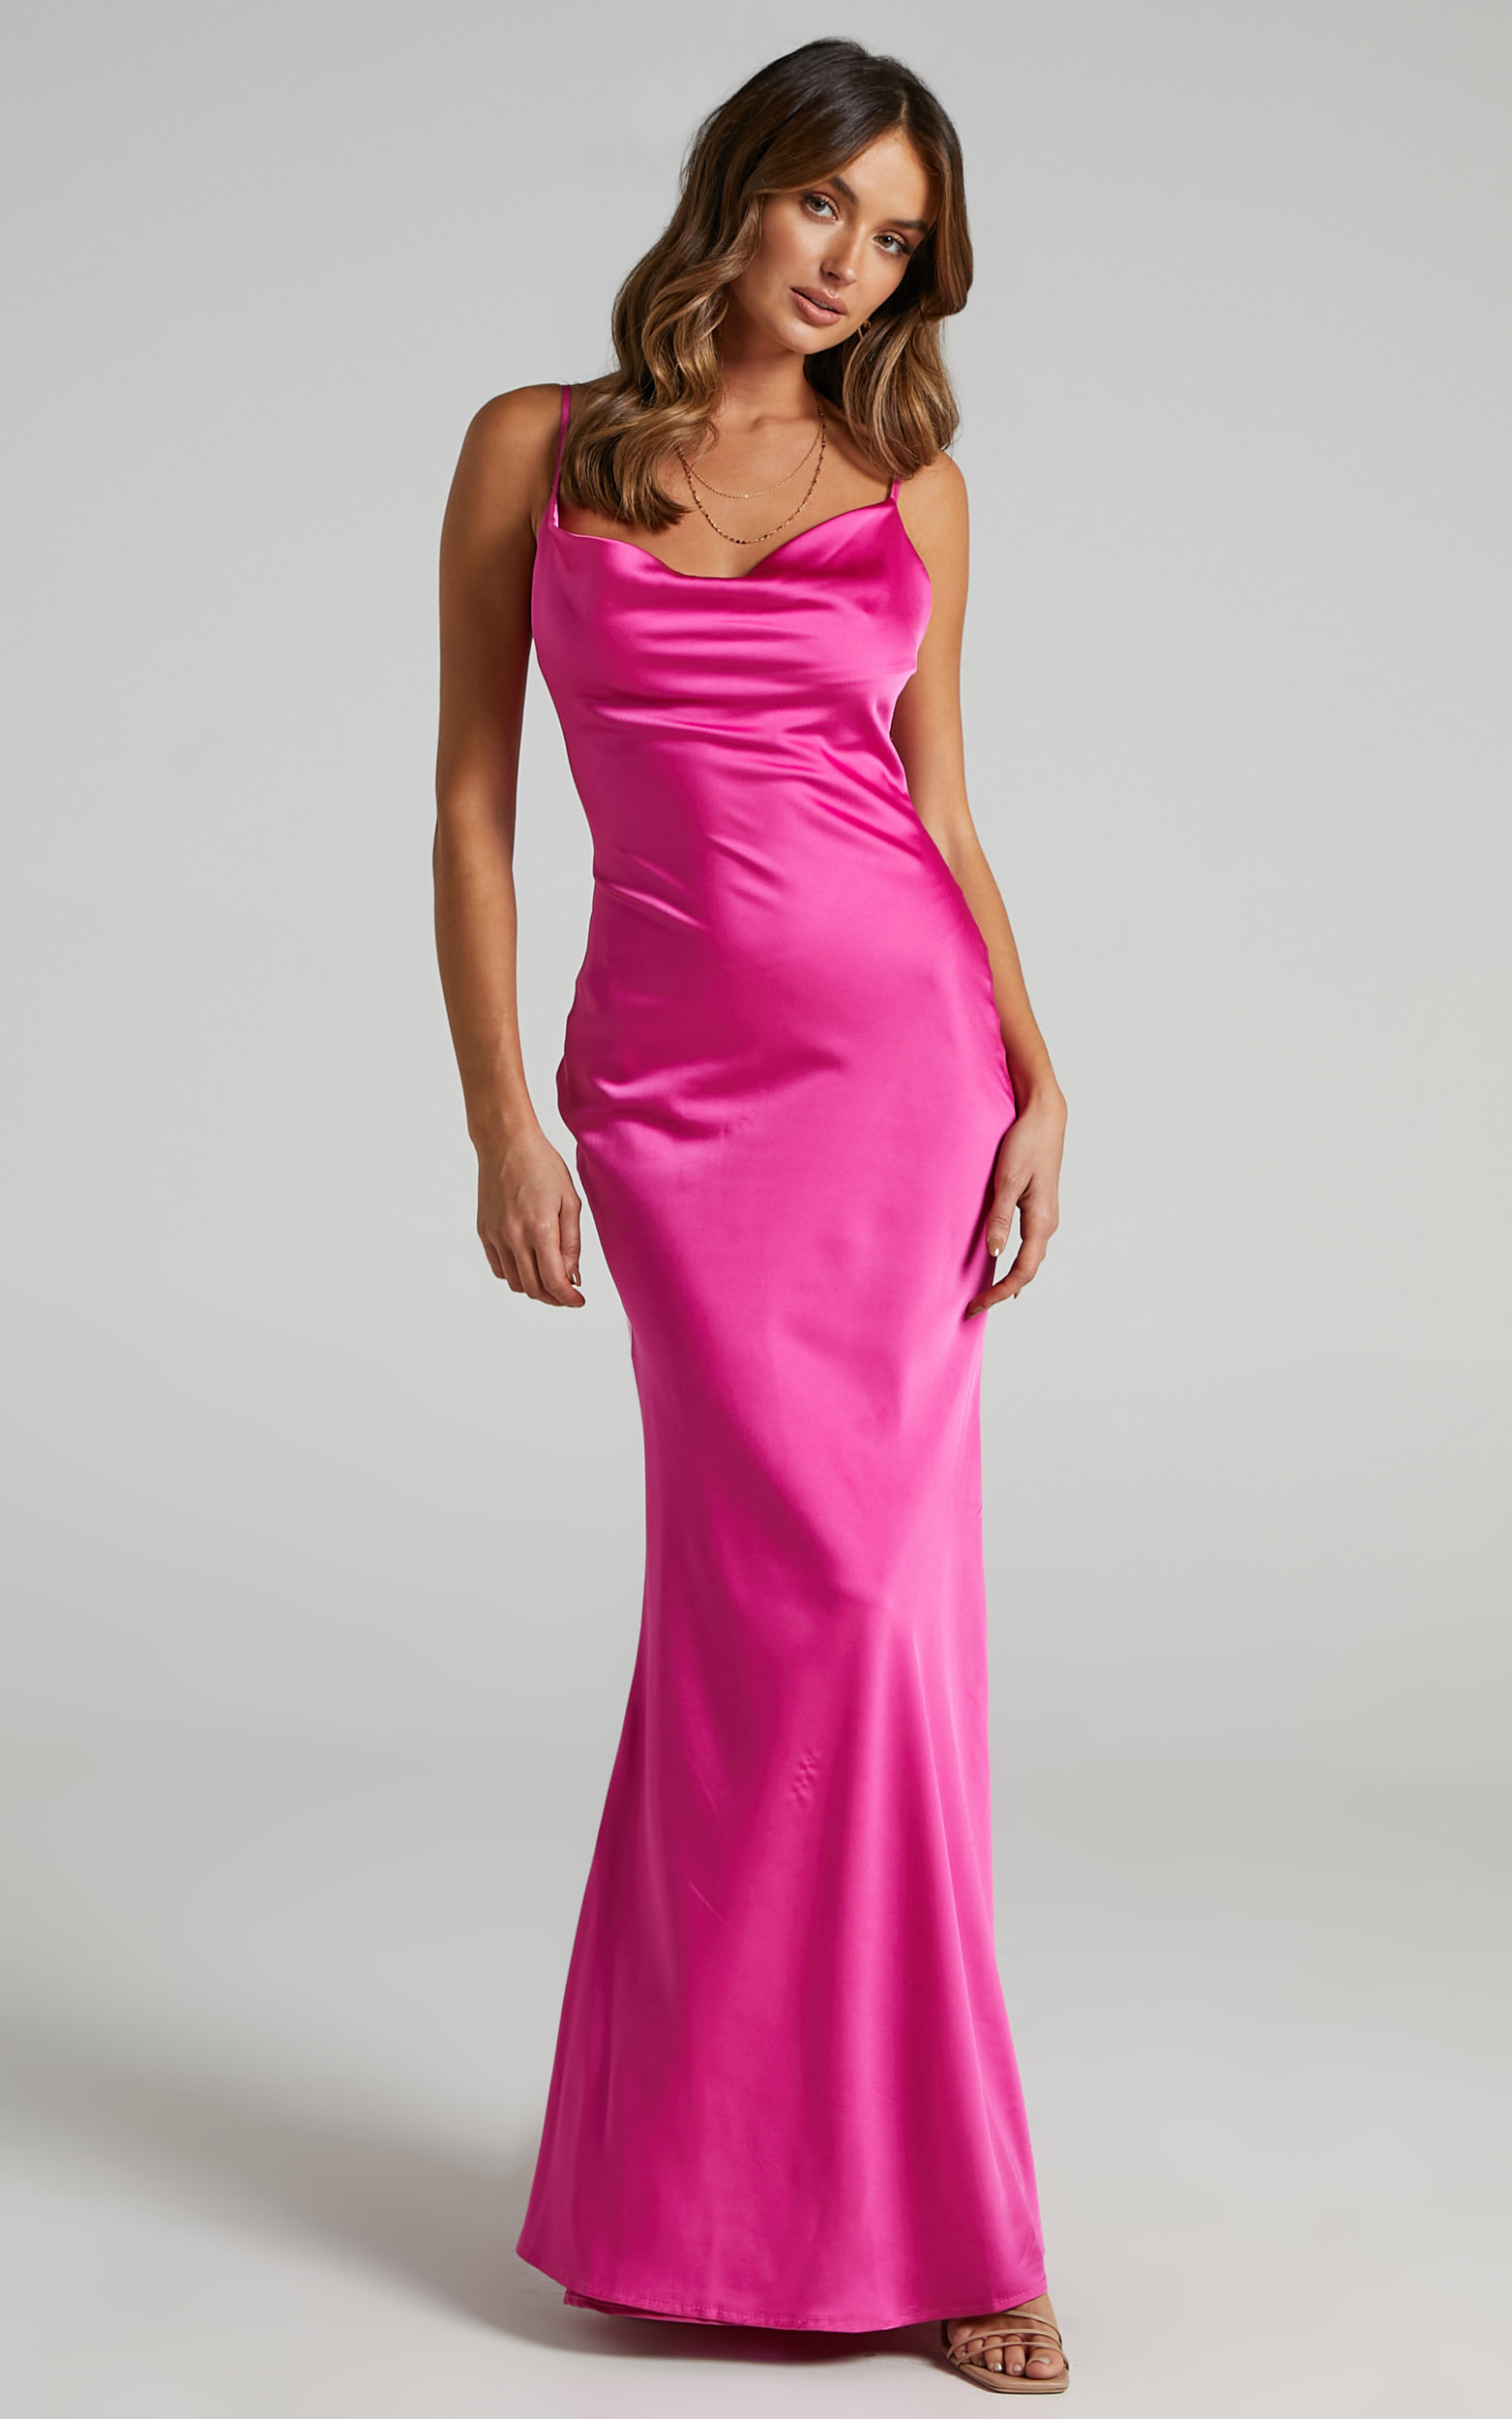 Lunaria Dress in Hot Pink Satin - 06, PNK1, hi-res image number null